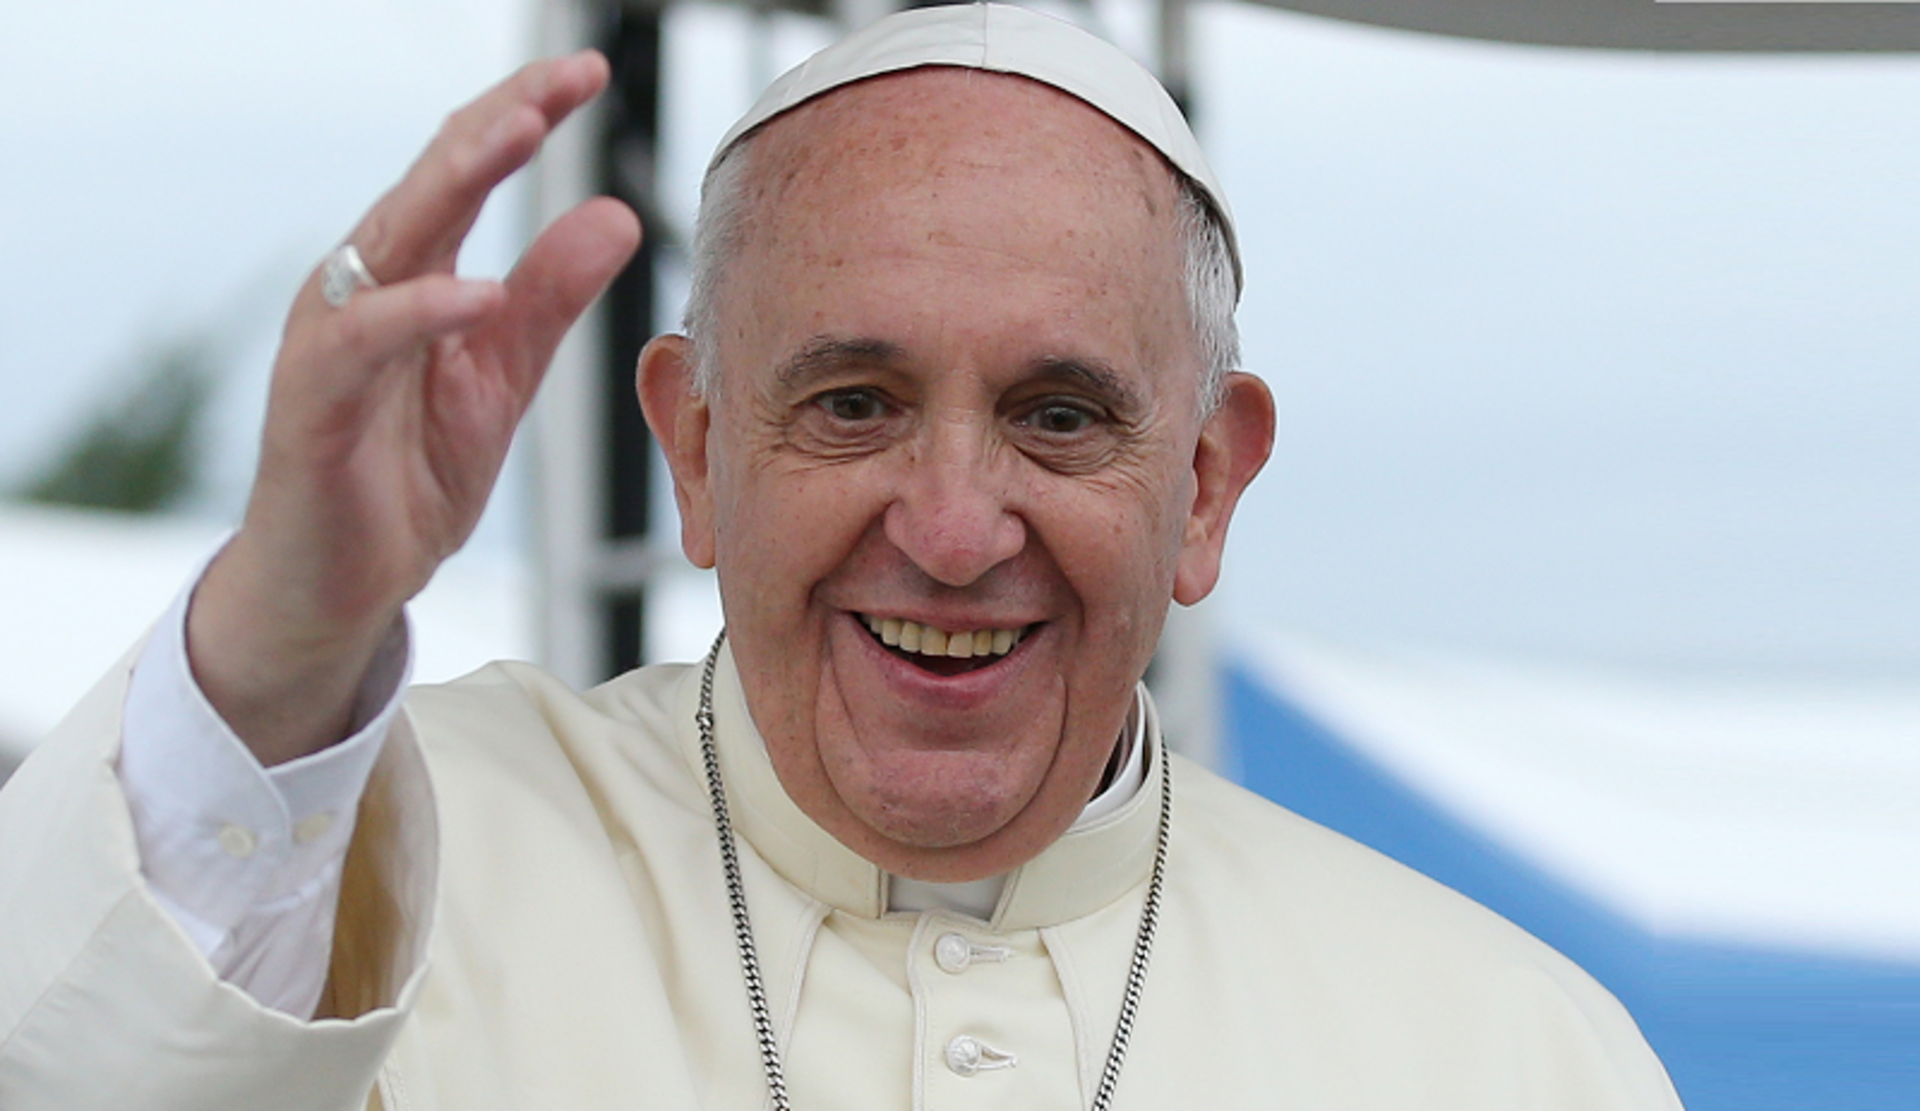 Папа Франциск. Папа Римский Франци́ск. Понтифик папа Римский Франциск. Франциск (папа Римский) фото. Сколько лет было папе римскому